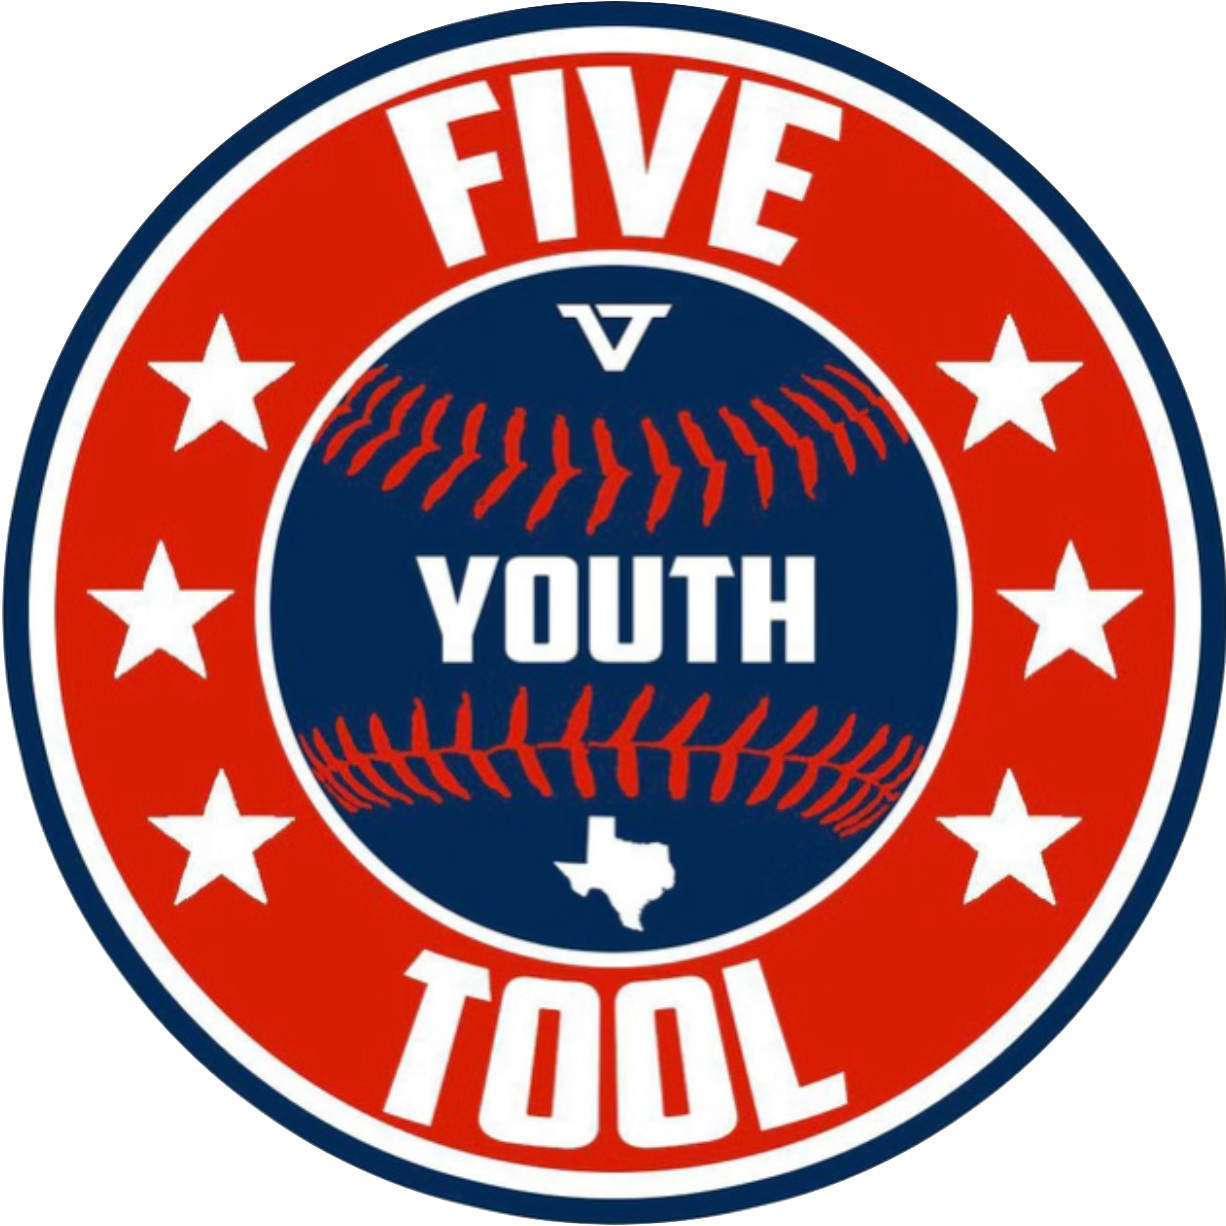 Five Tool Youth Elite Invitational